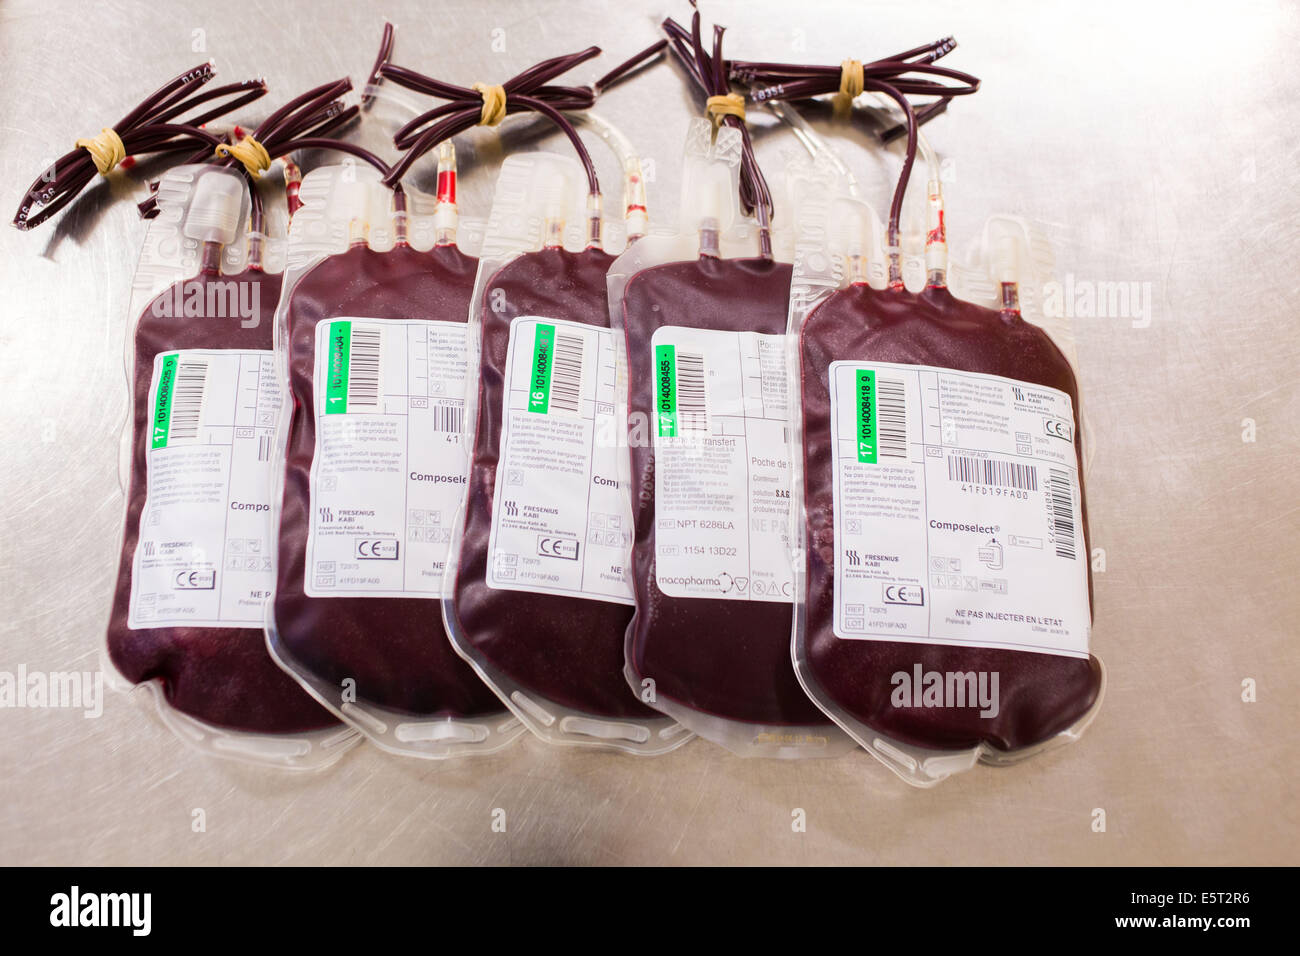 Blutbeutel, Spenderblut Verarbeitung, Armee-Bluttransfusion-Service (CTSA) in Clamart, Frankreich. Stockfoto